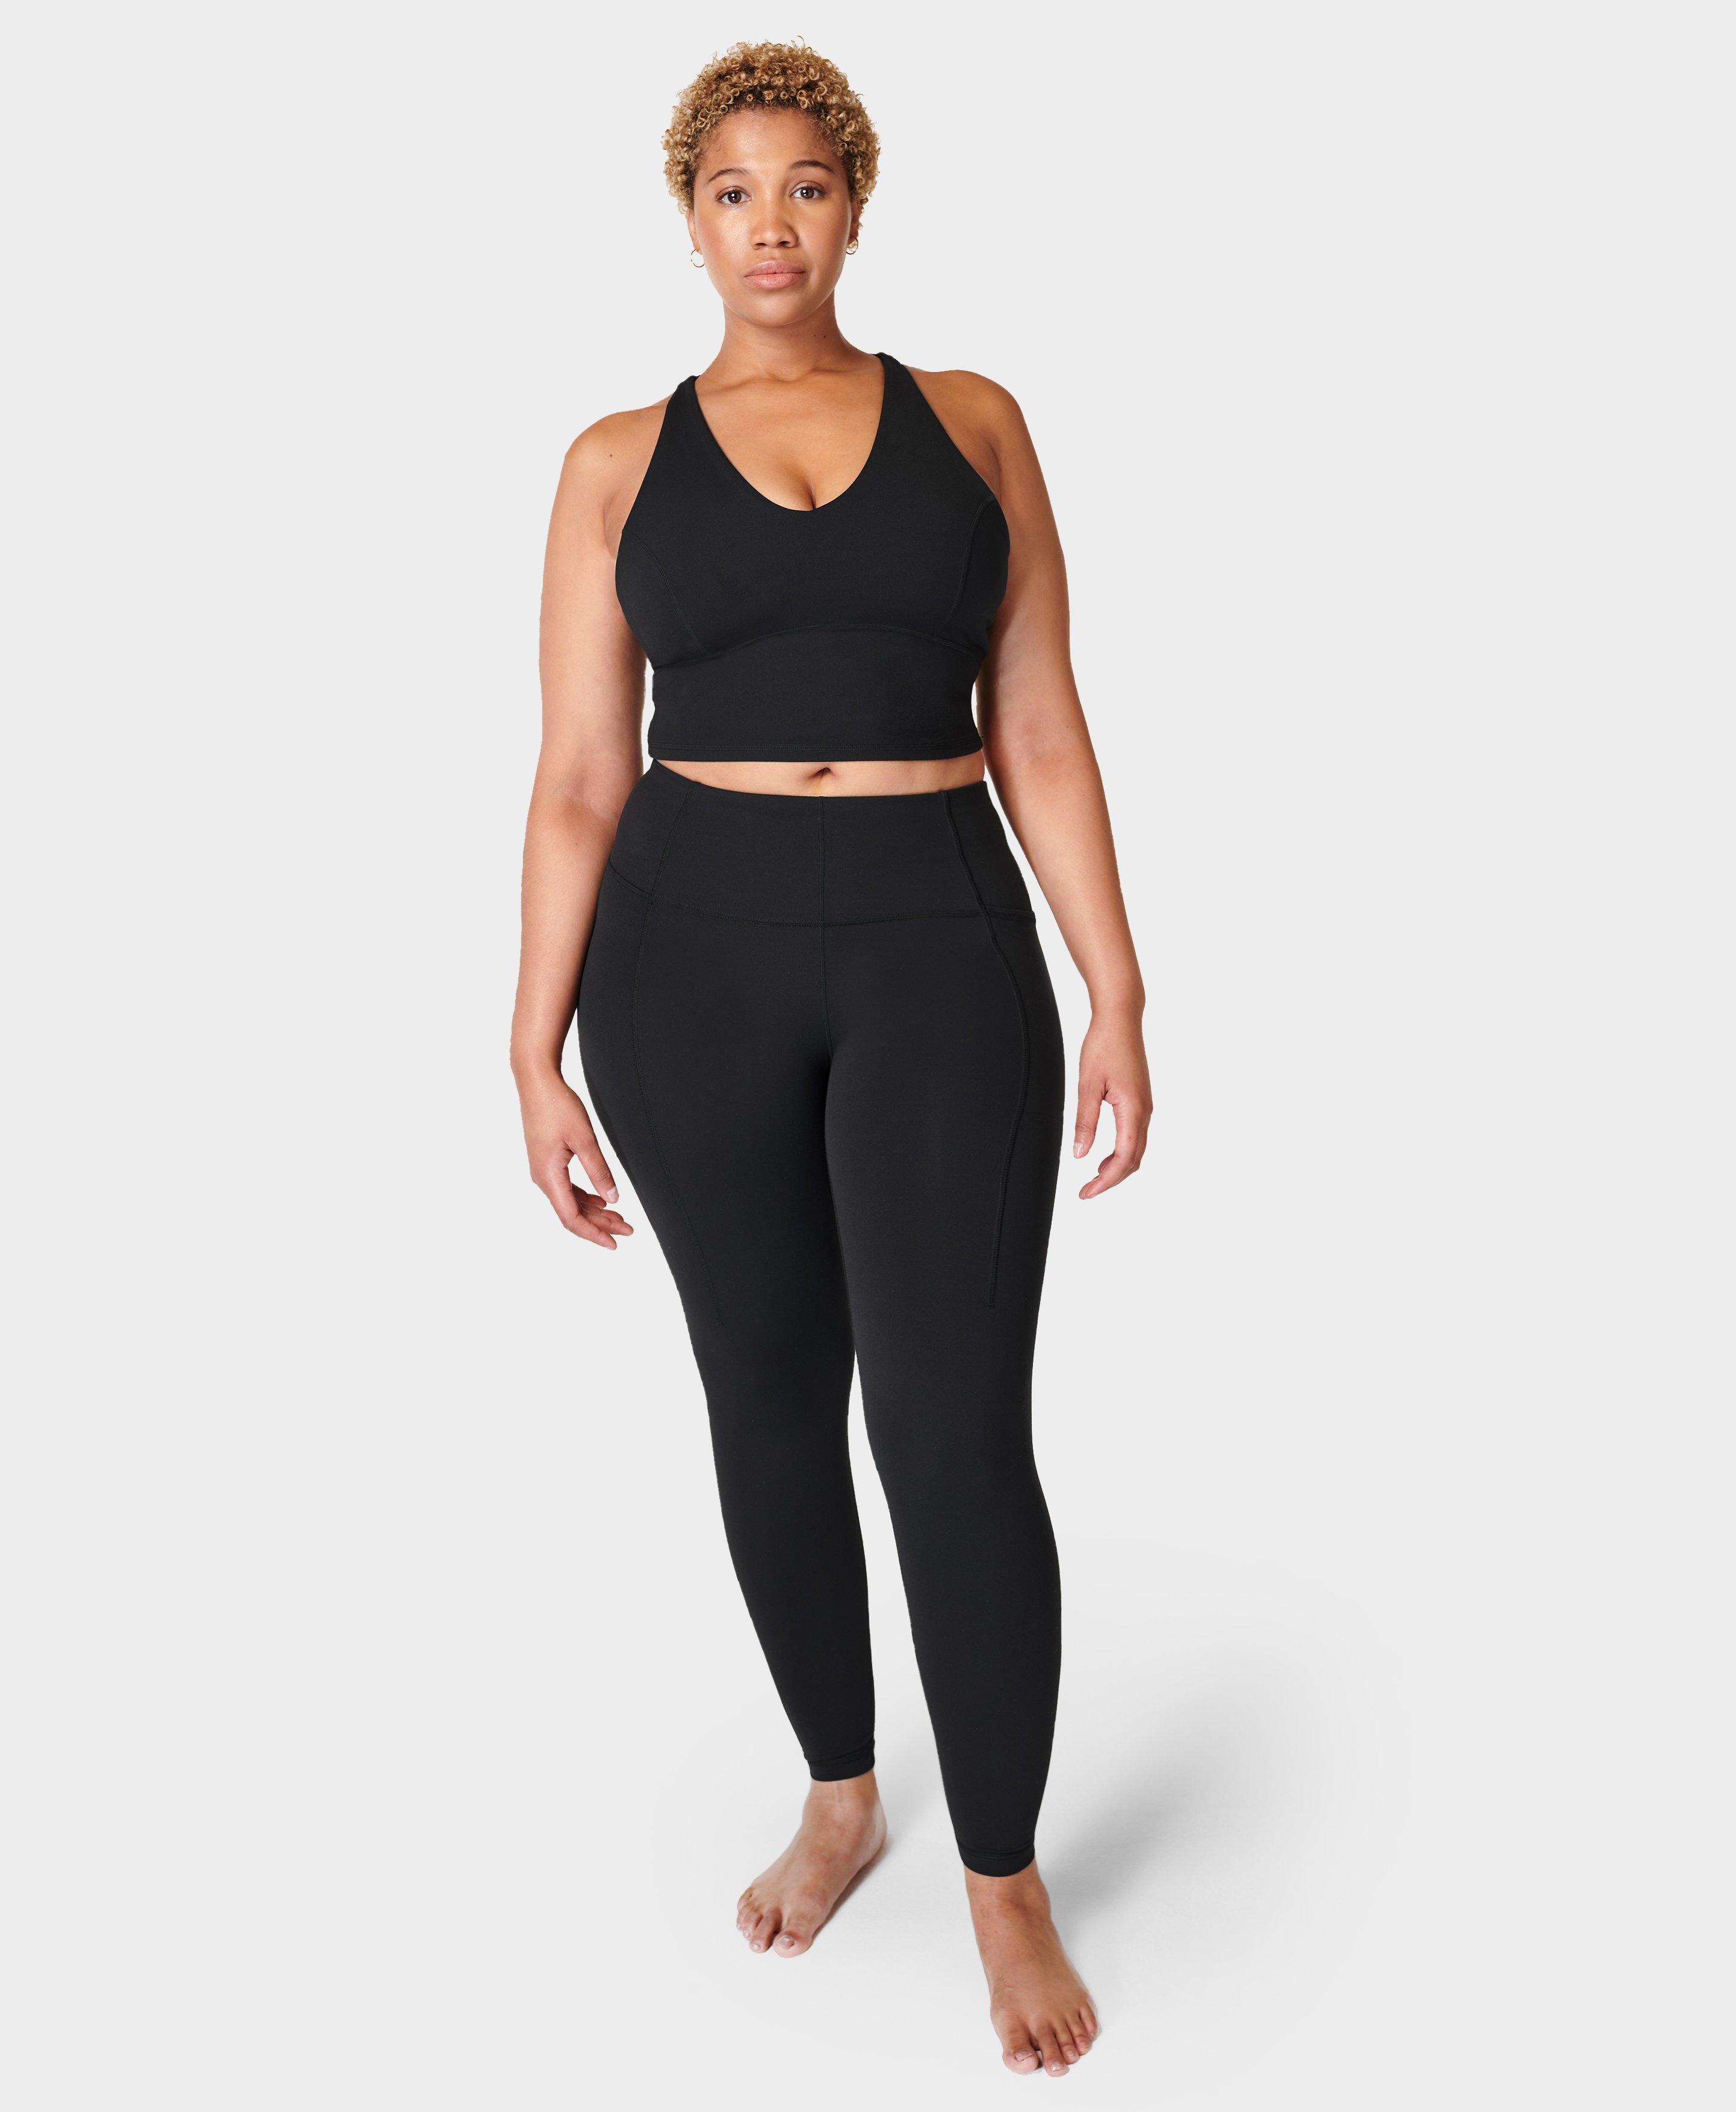 Super Soft Crop Strappy Back Workout Bra Tank - Black, Women's Vests